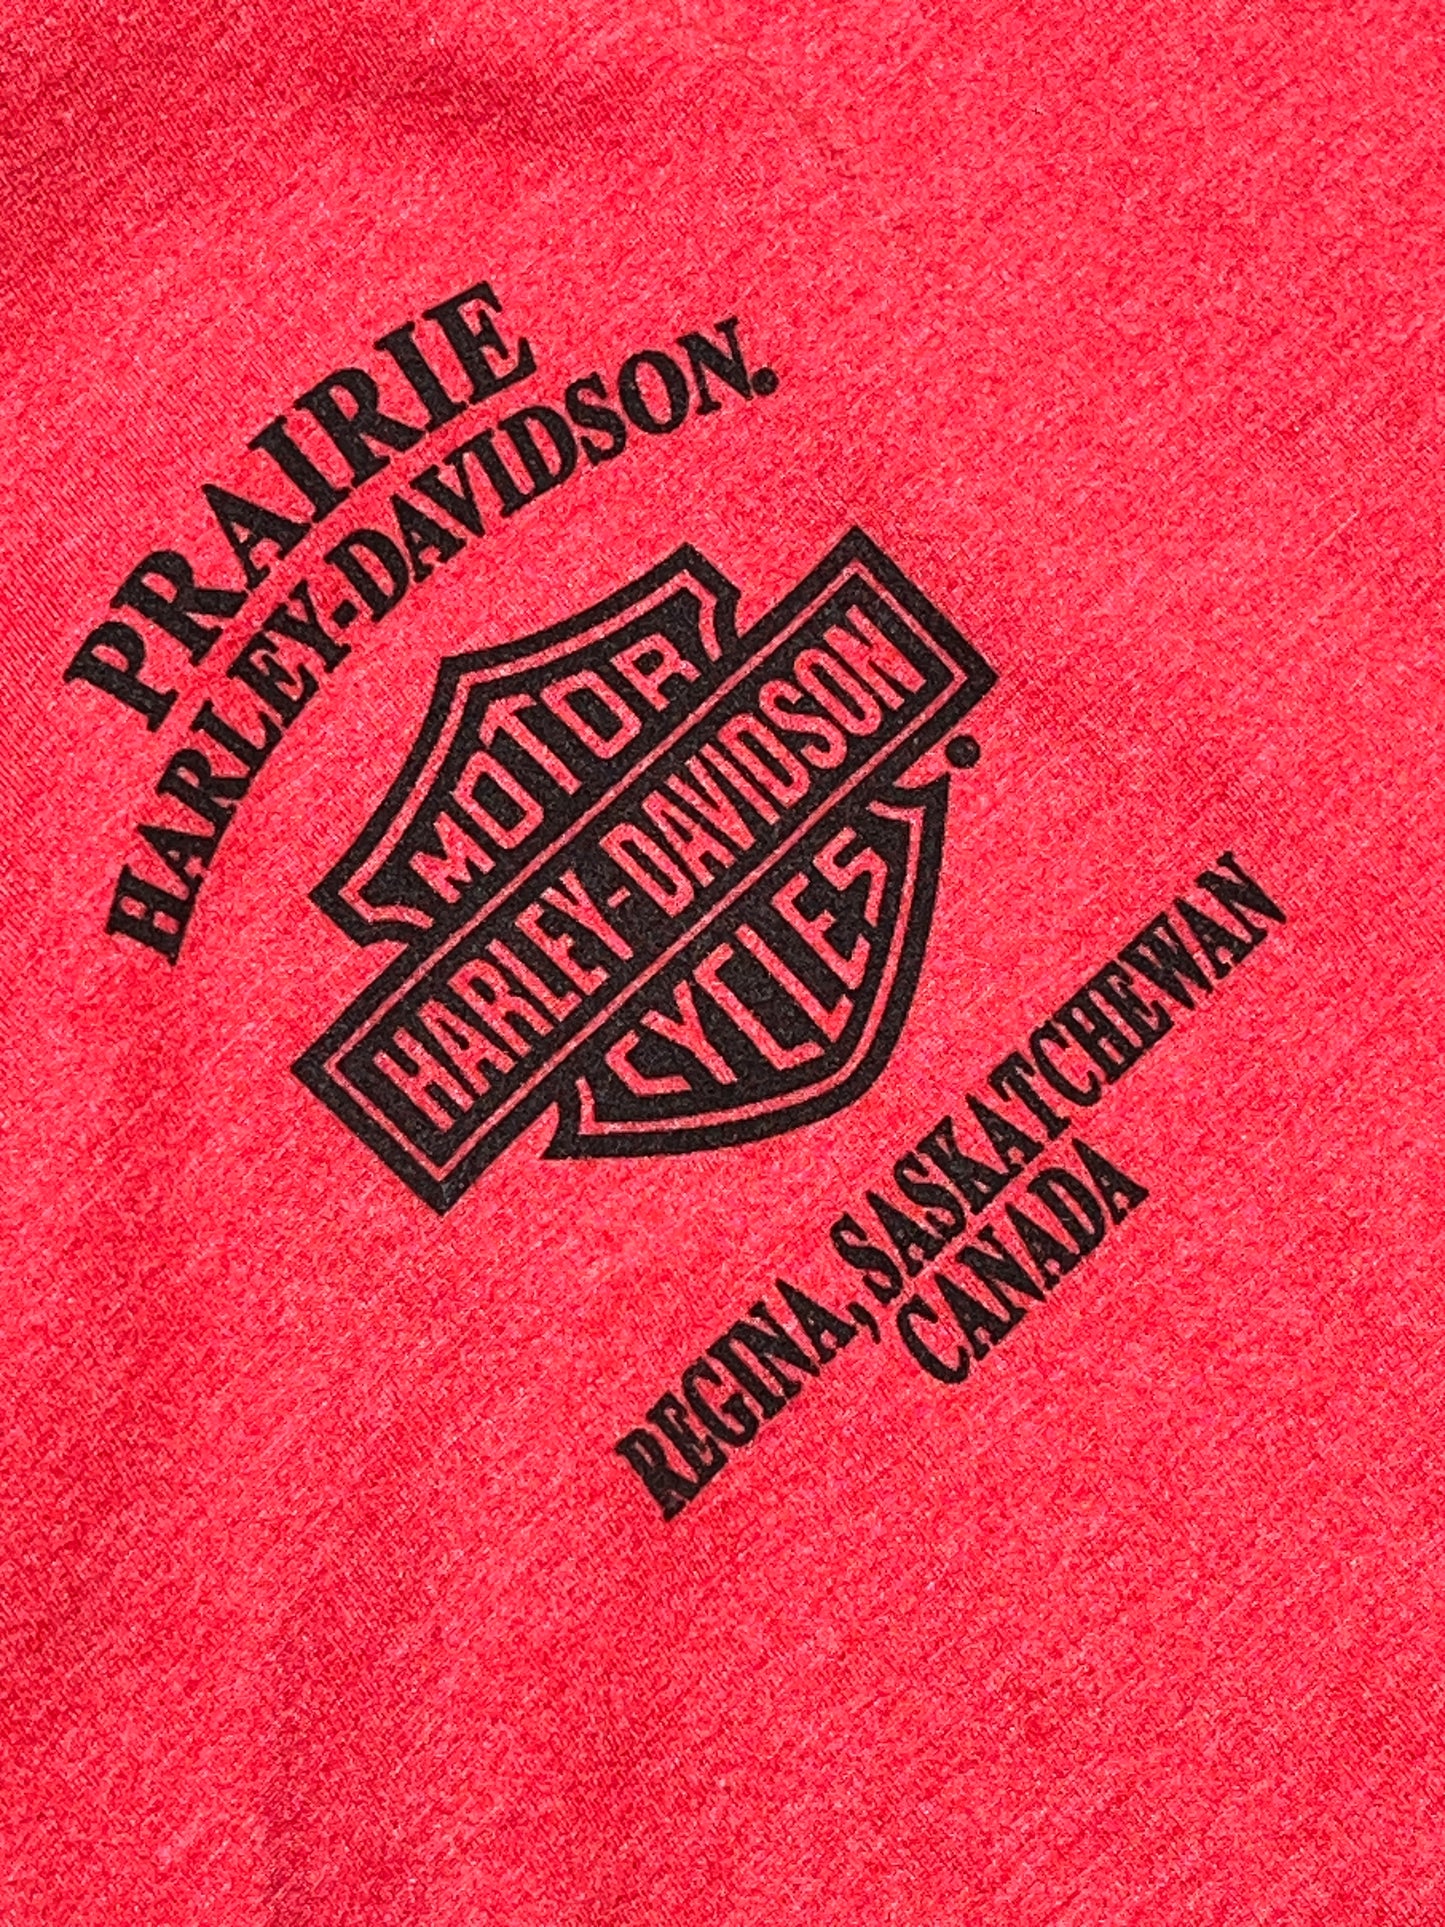 Vintage Harley Davidson T-Shirt 1936 Engine Motorcycles Regina Canada